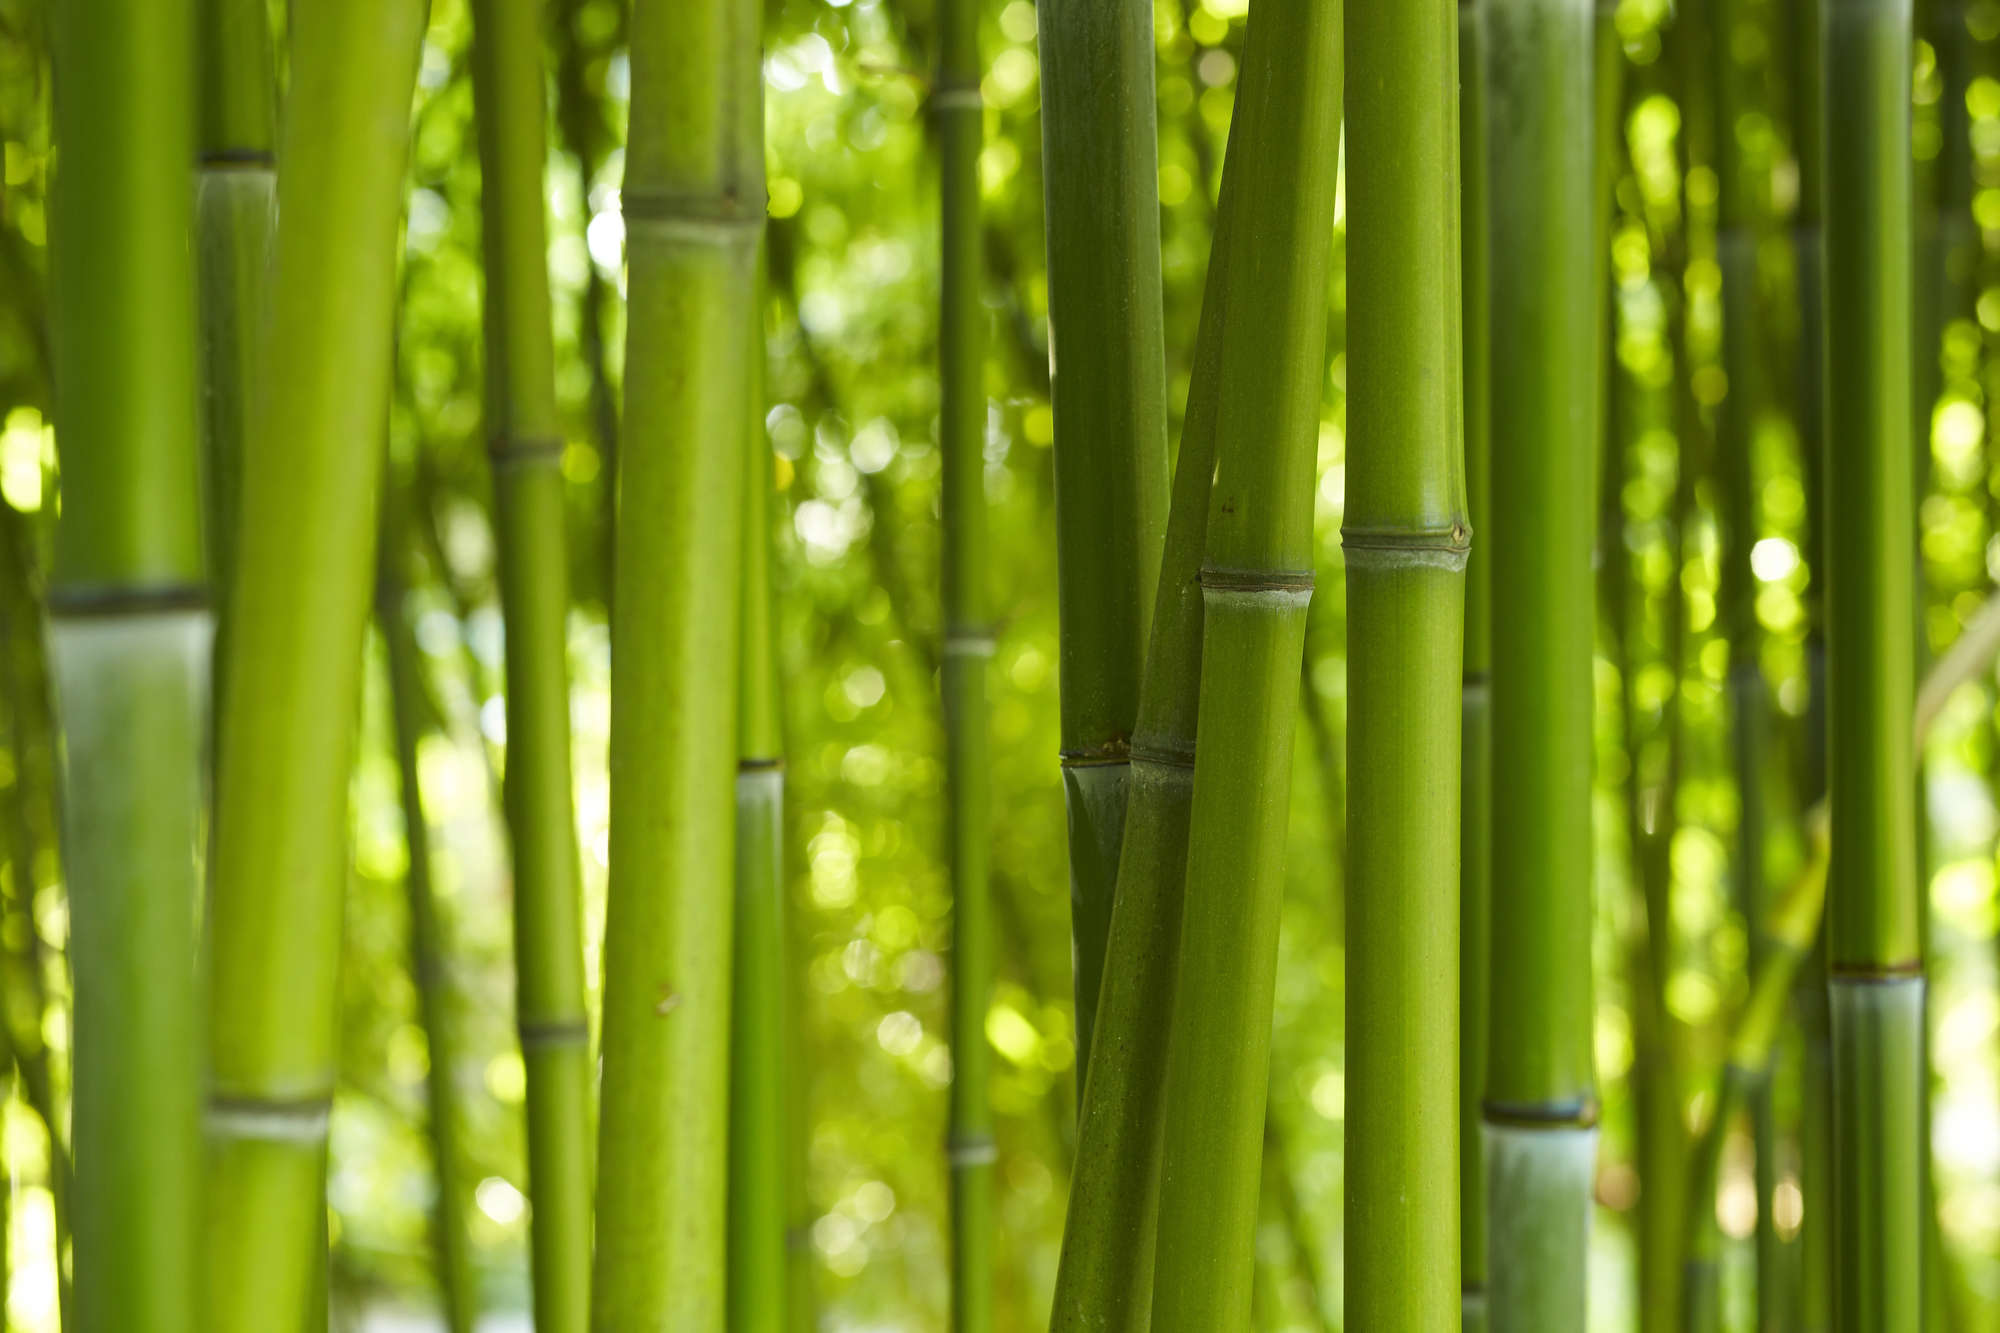             Carta da parati natura Bamboo Close-up su tessuto non tessuto liscio opaco
        